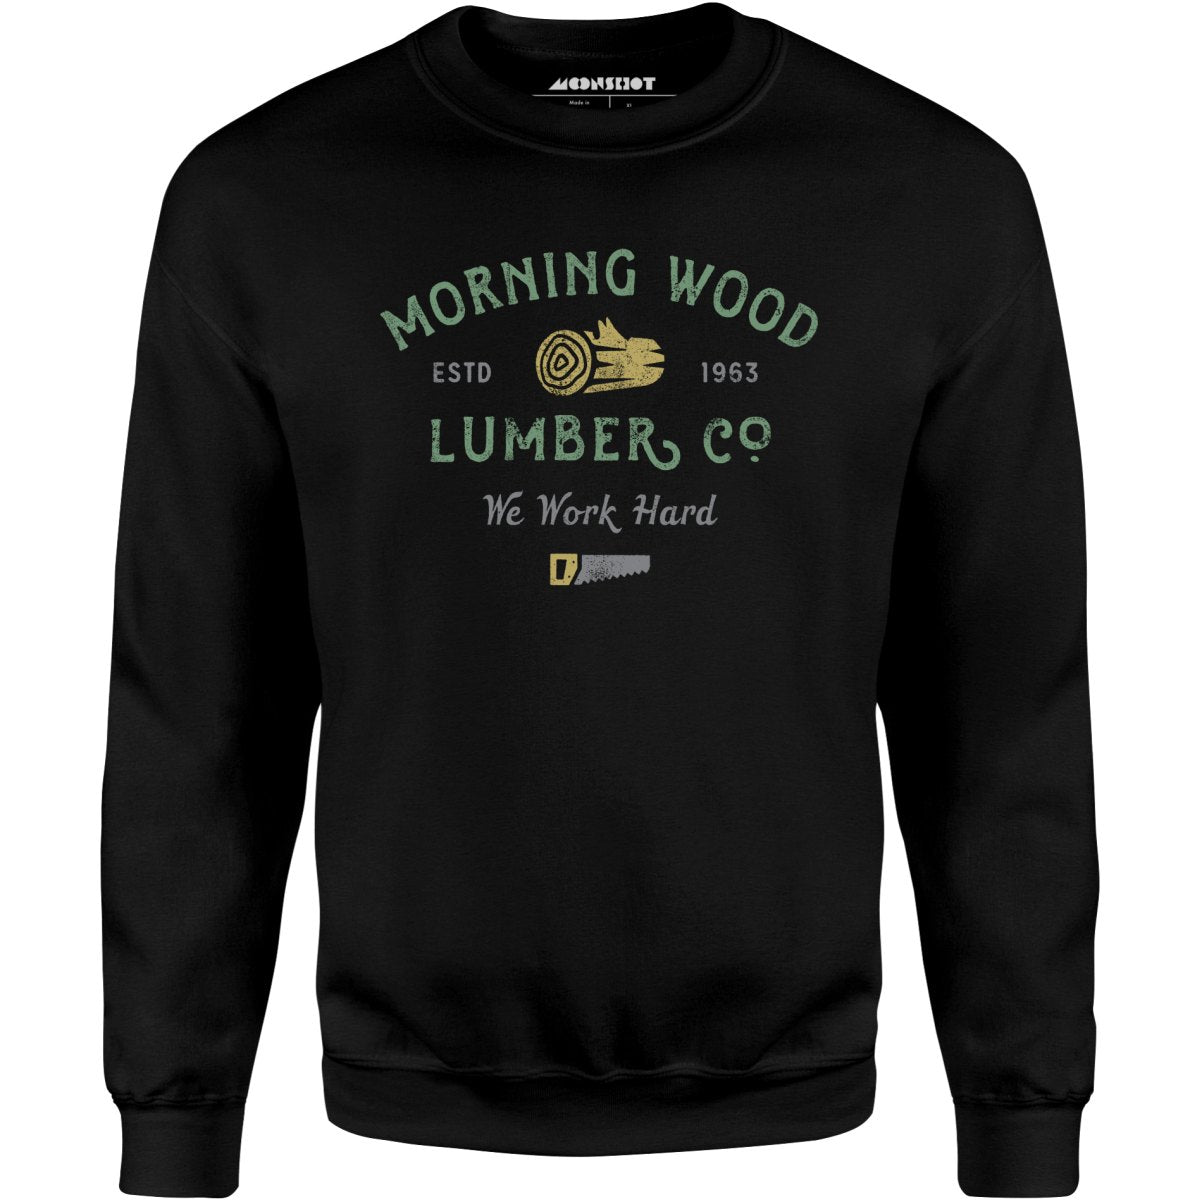 Morning Wood Lumber Company - Unisex Sweatshirt